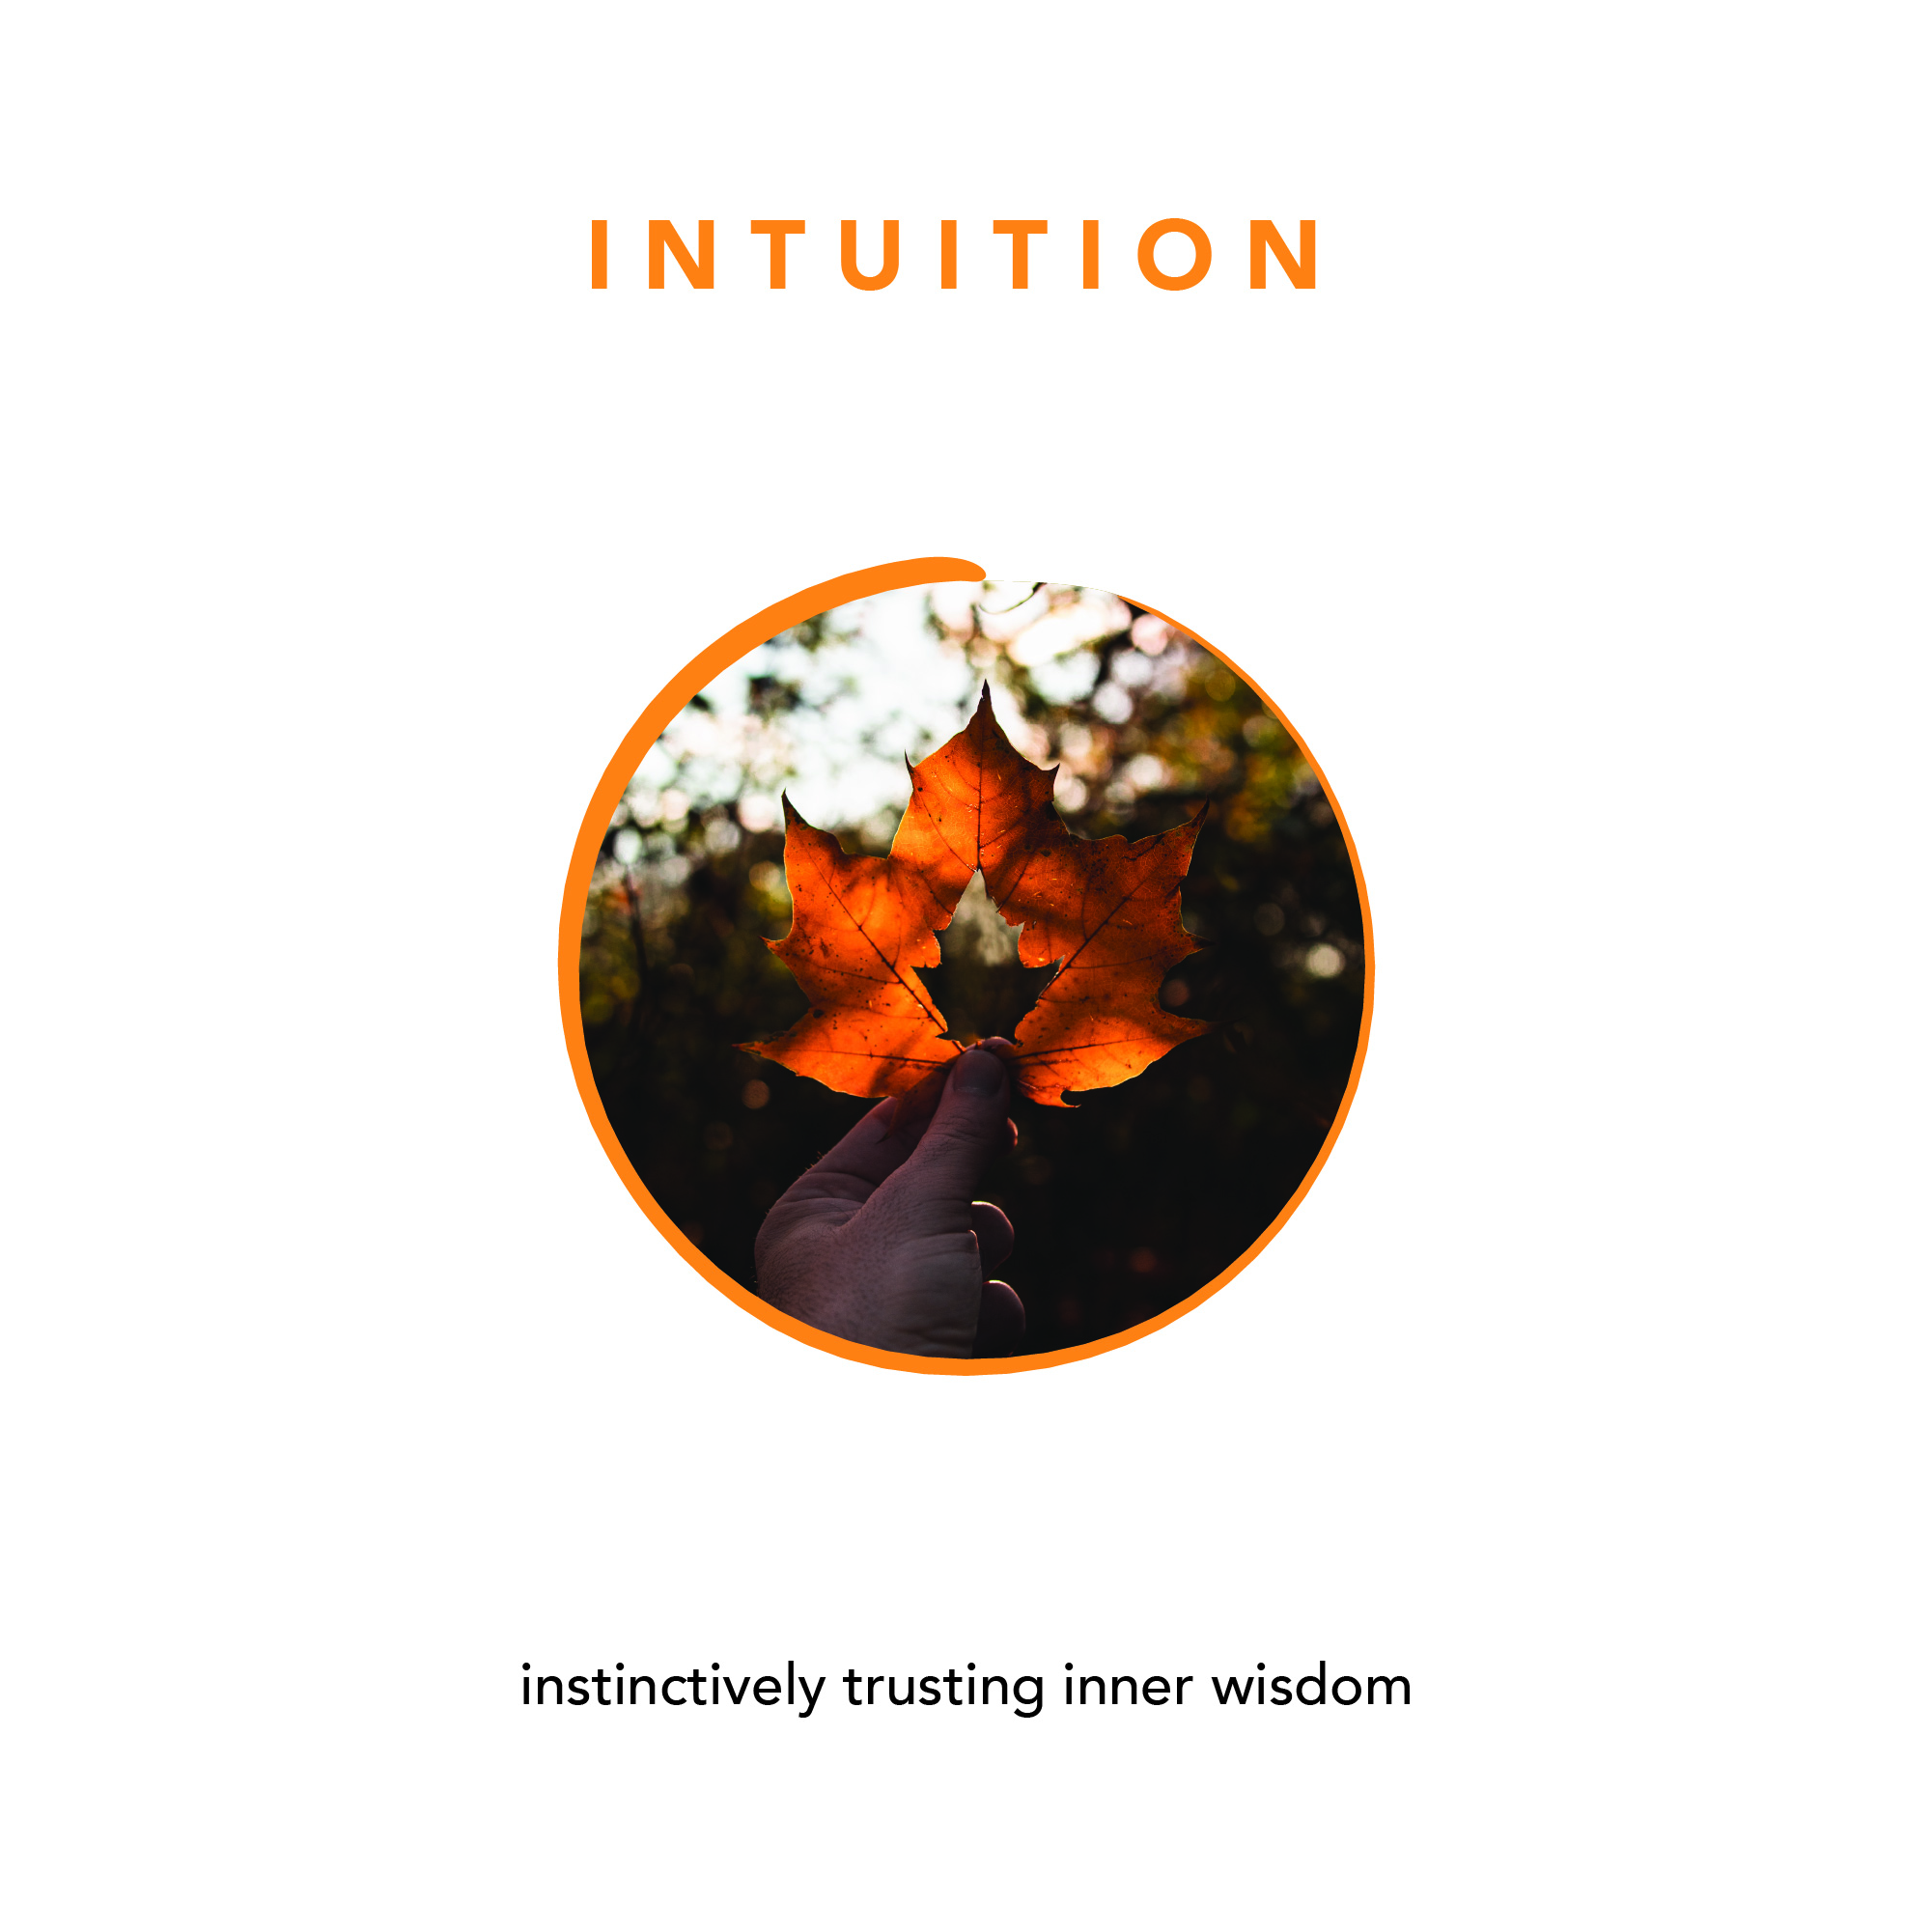 Intuition instinctively trusting inner wisdom